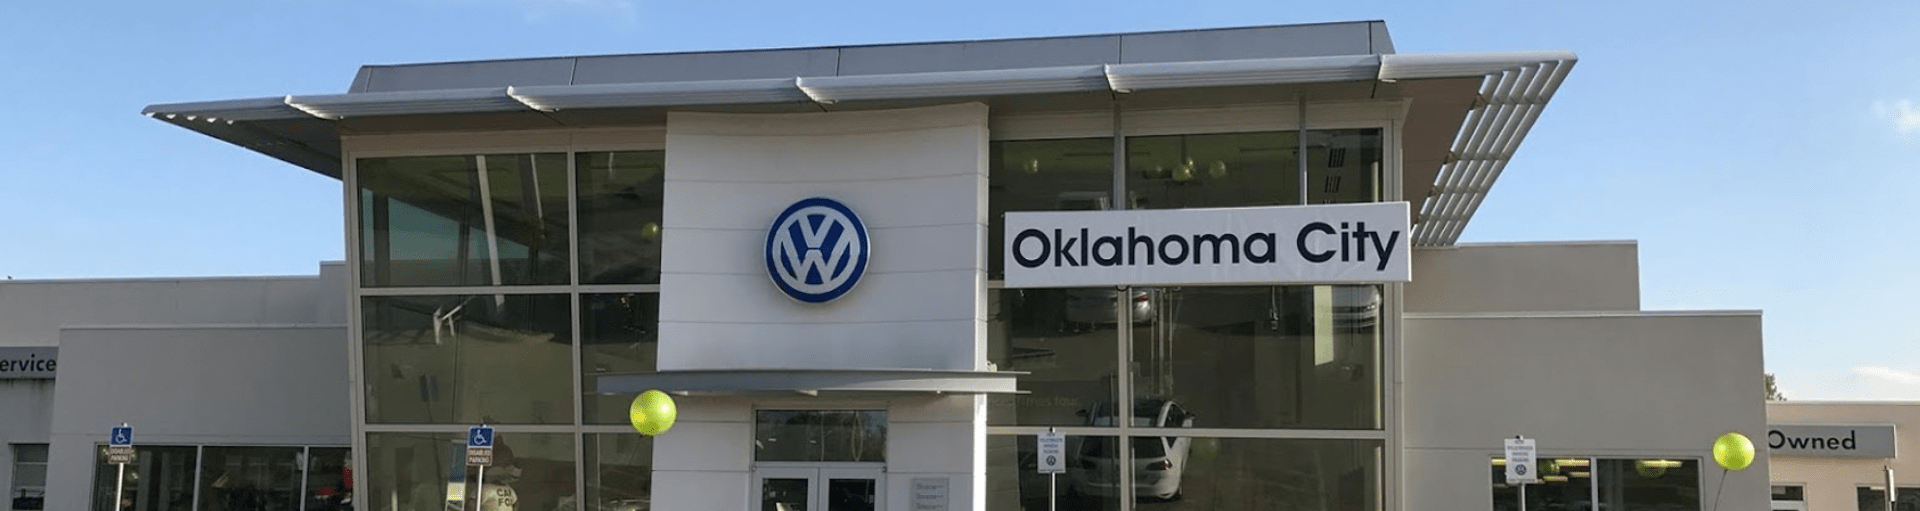 Oklahoma City Volkswagen Atlas Service & Repair